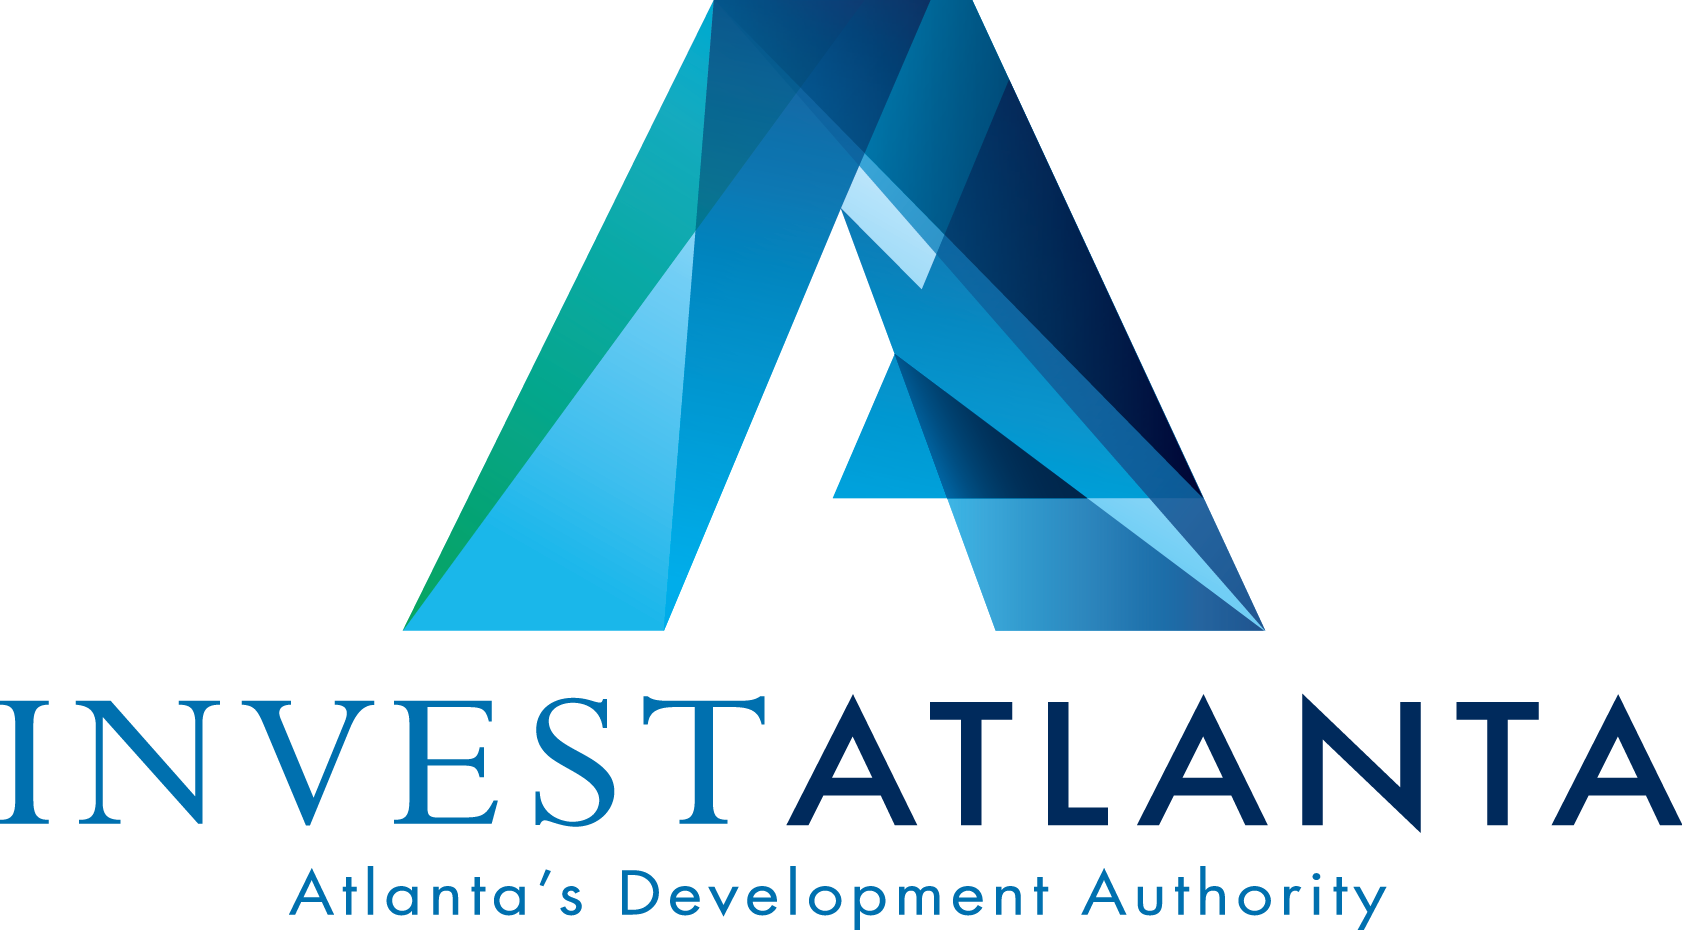 Invest_Atlanta_logo.png